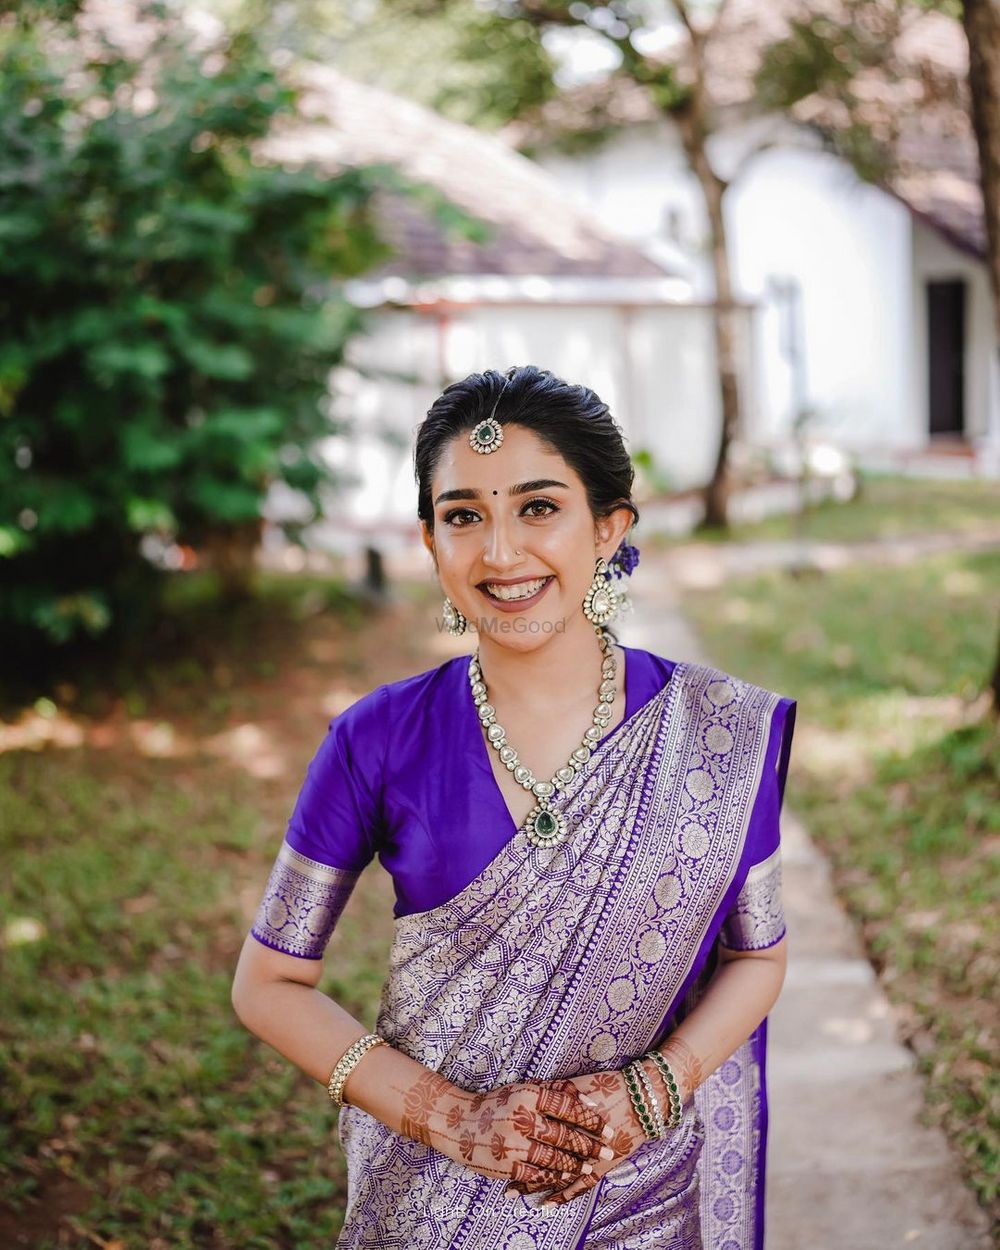 Photo of South Indian bride in a purple kanjeevaram saree